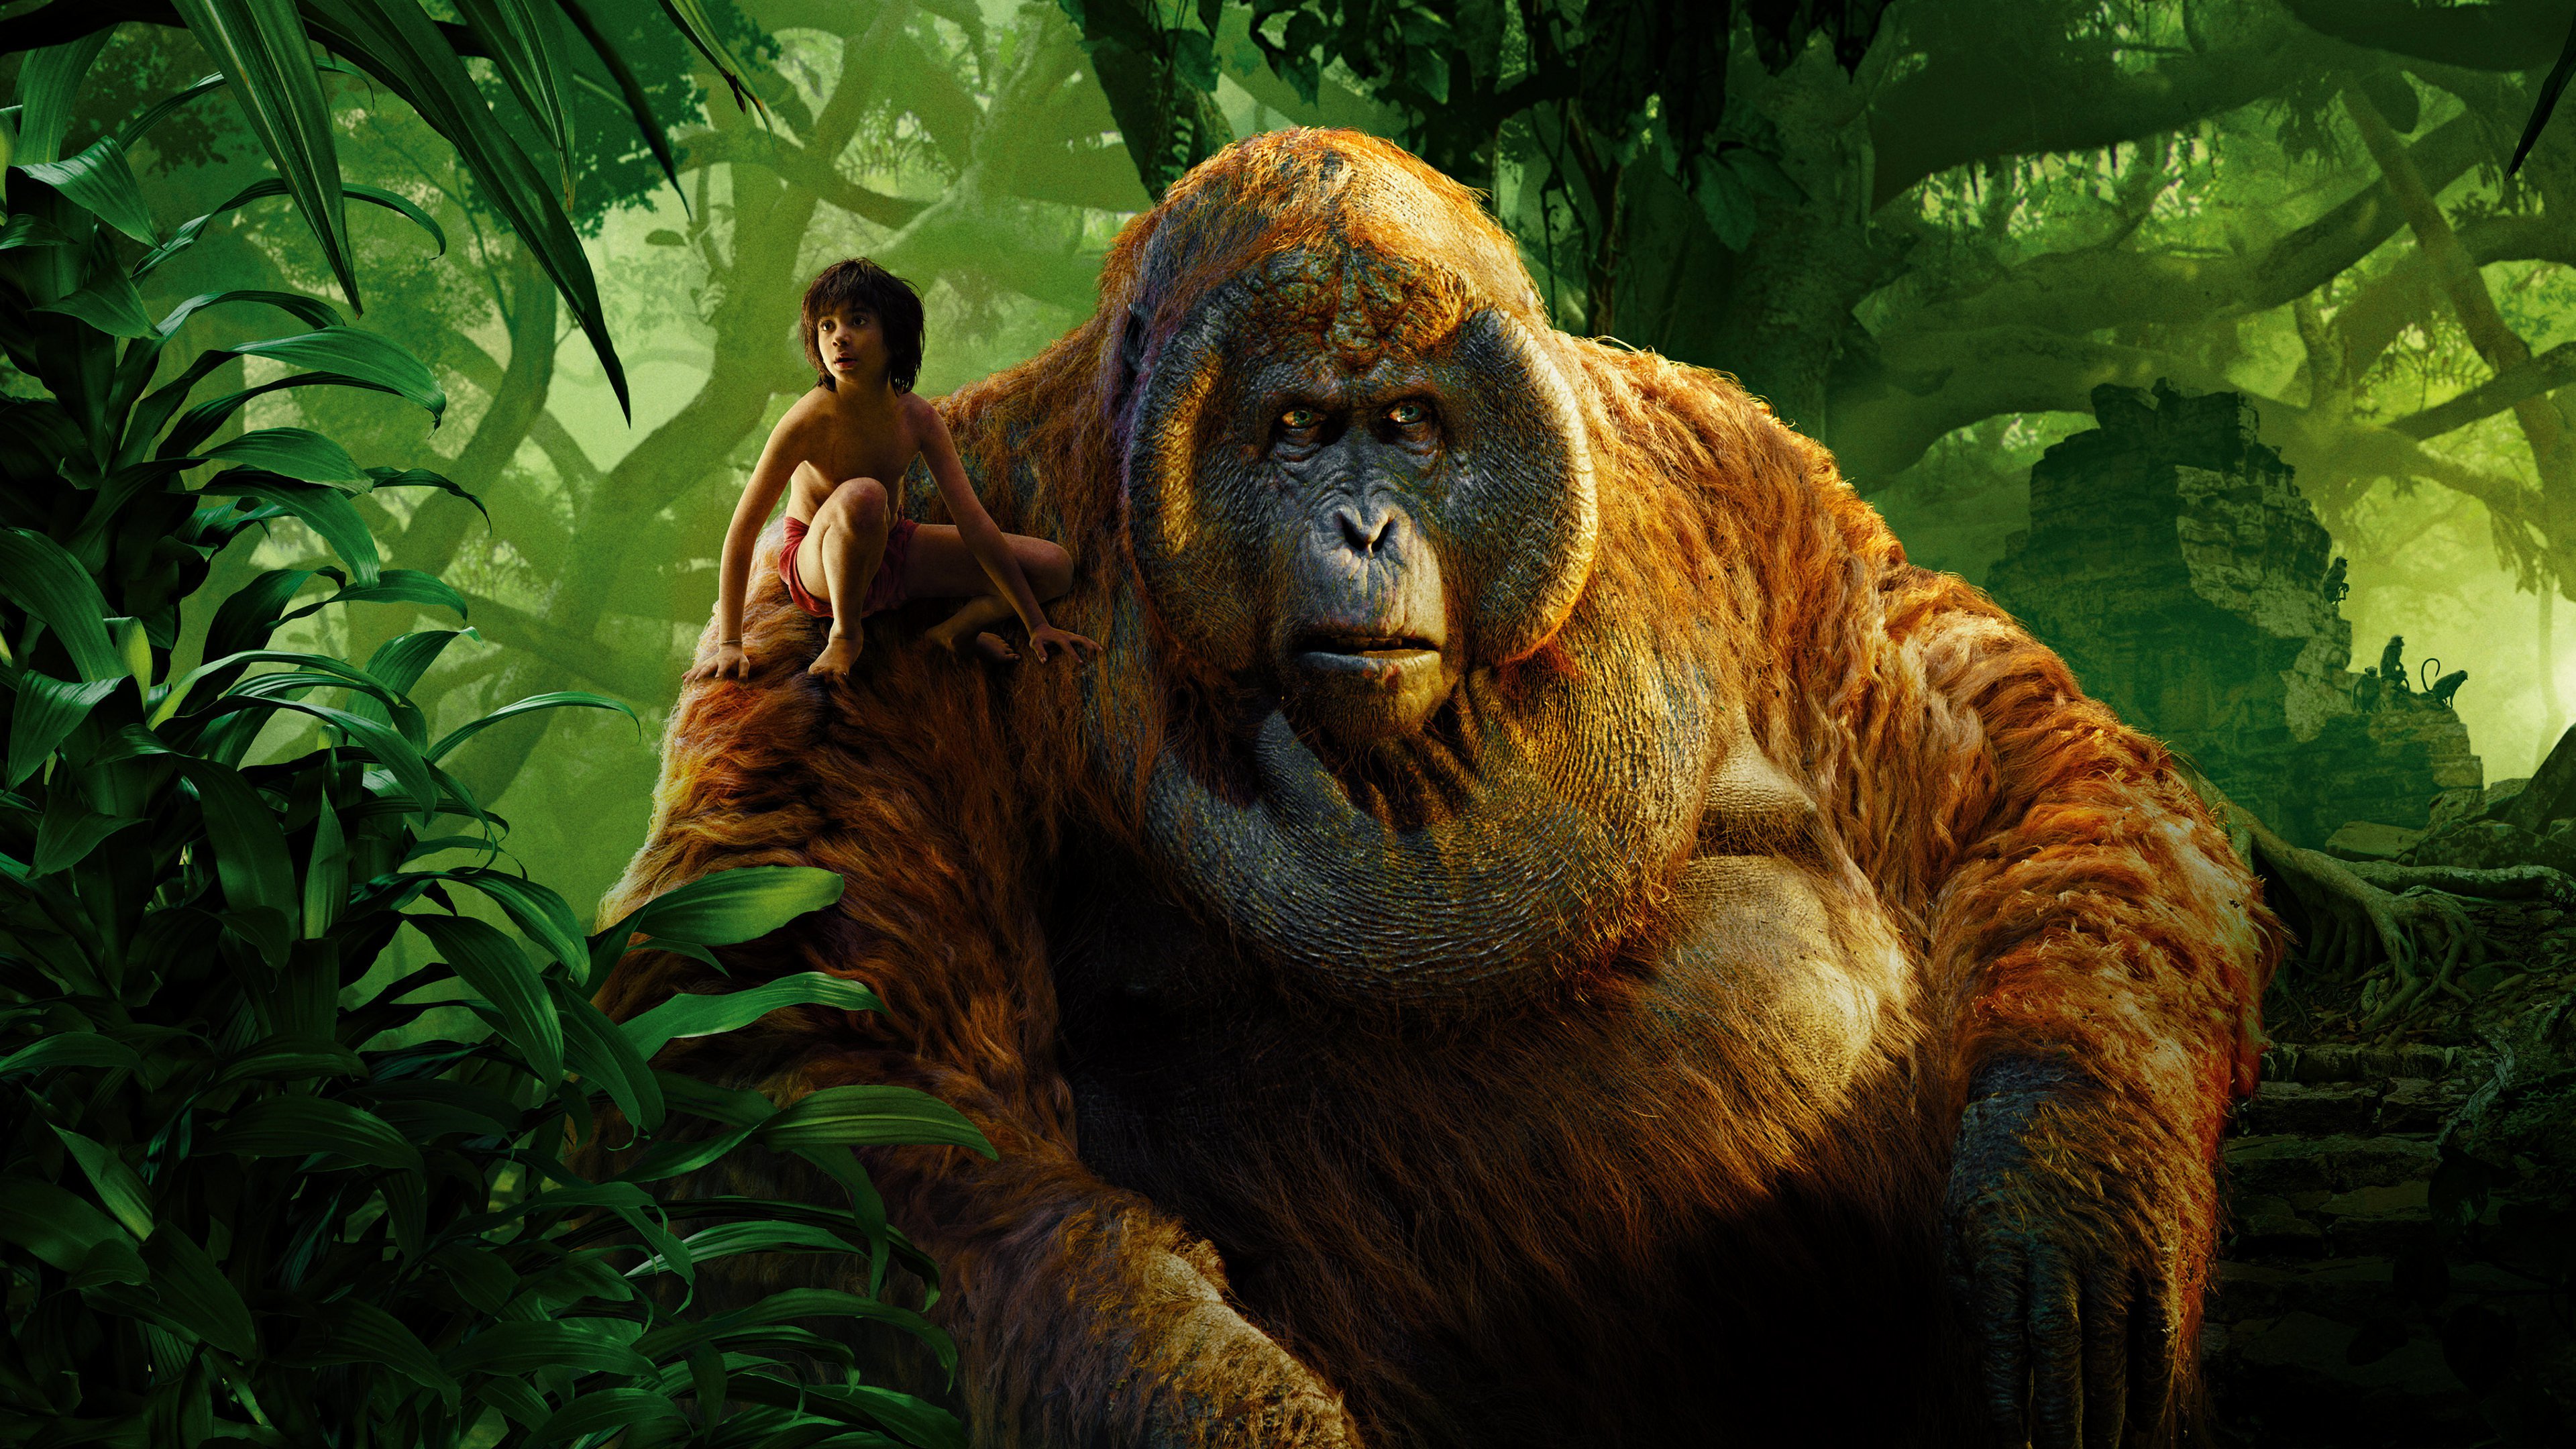 The Jungle Book 4k Ultra HD Wallpaper